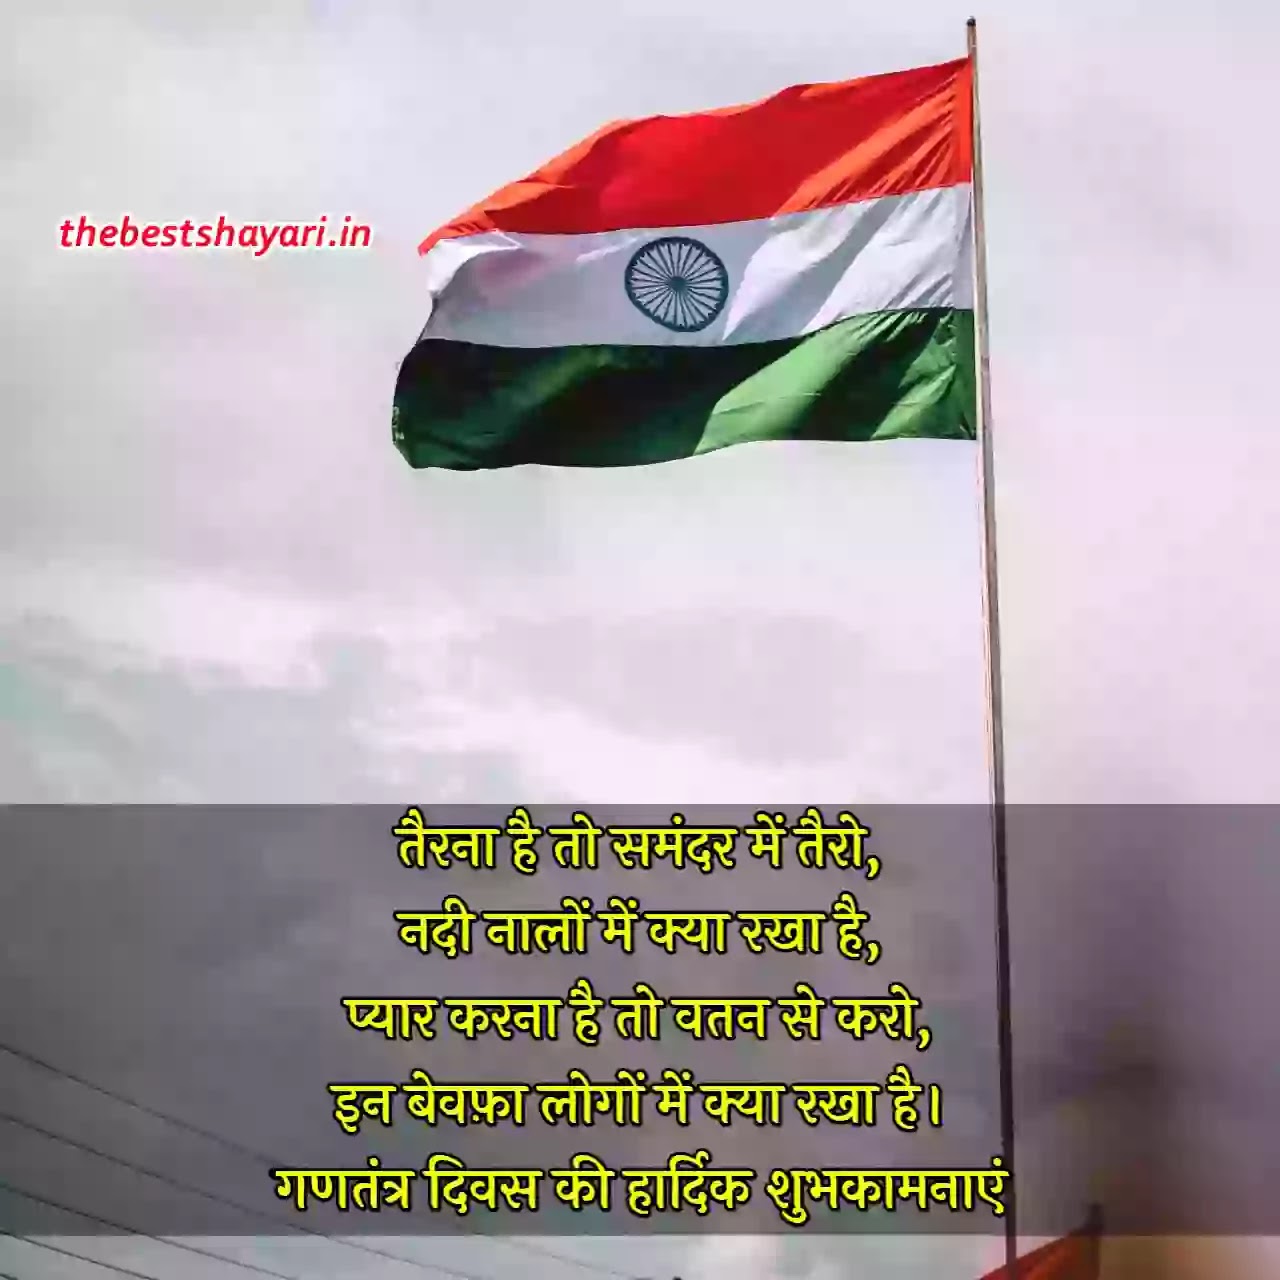 Republic Day quotes Hindi